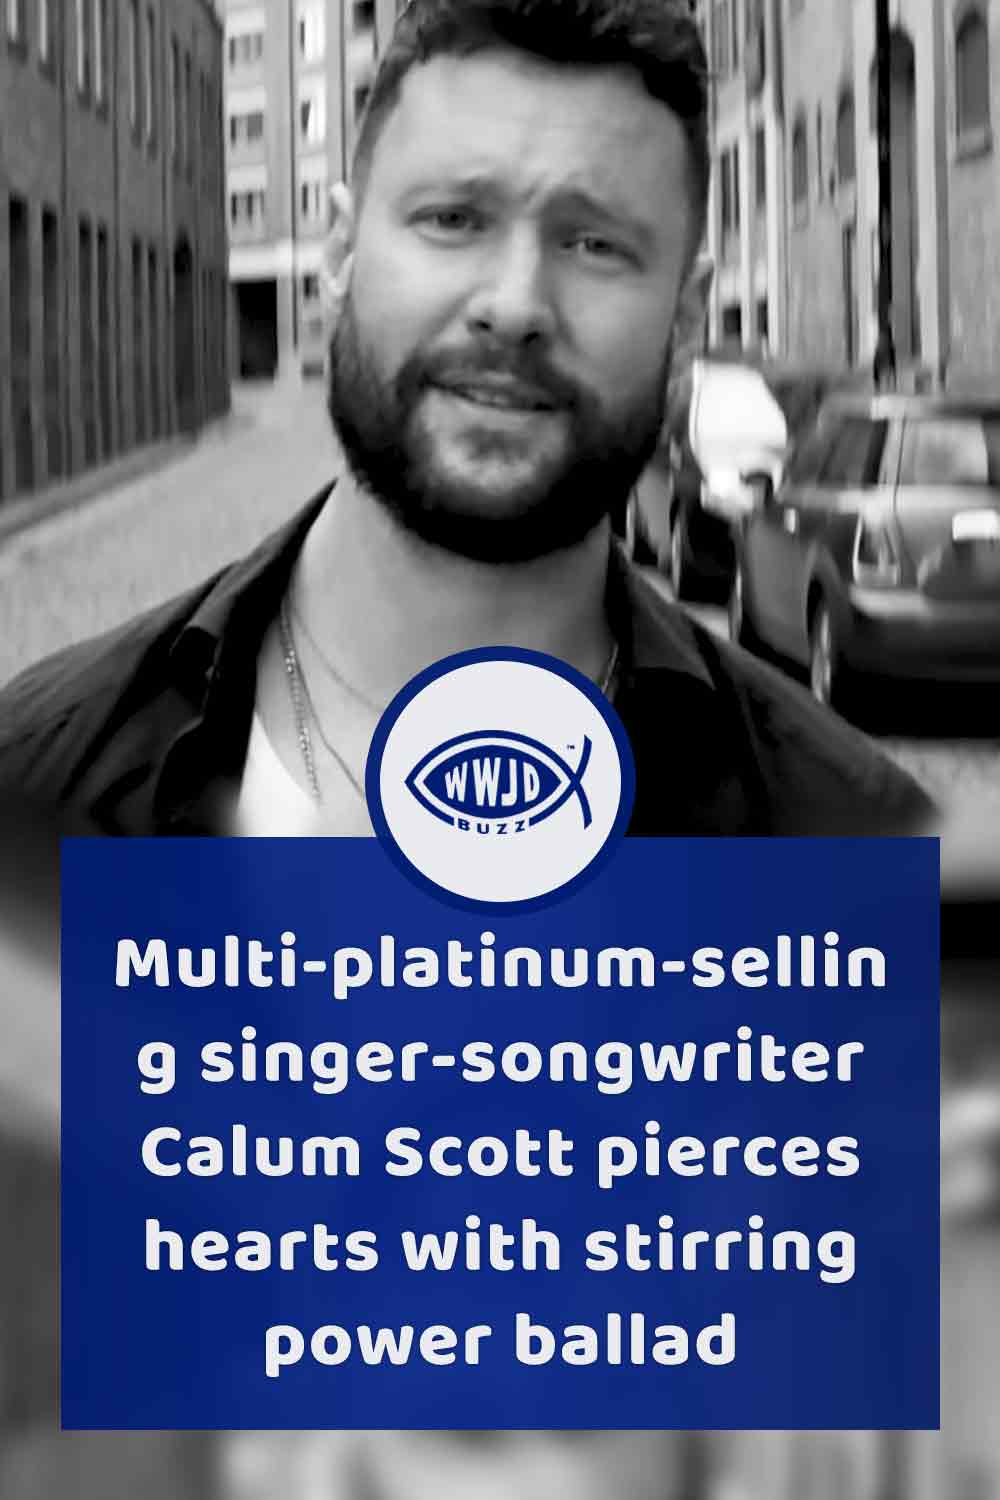 Multi-platinum-selling singer-songwriter Calum Scott pierces hearts with stirring power ballad